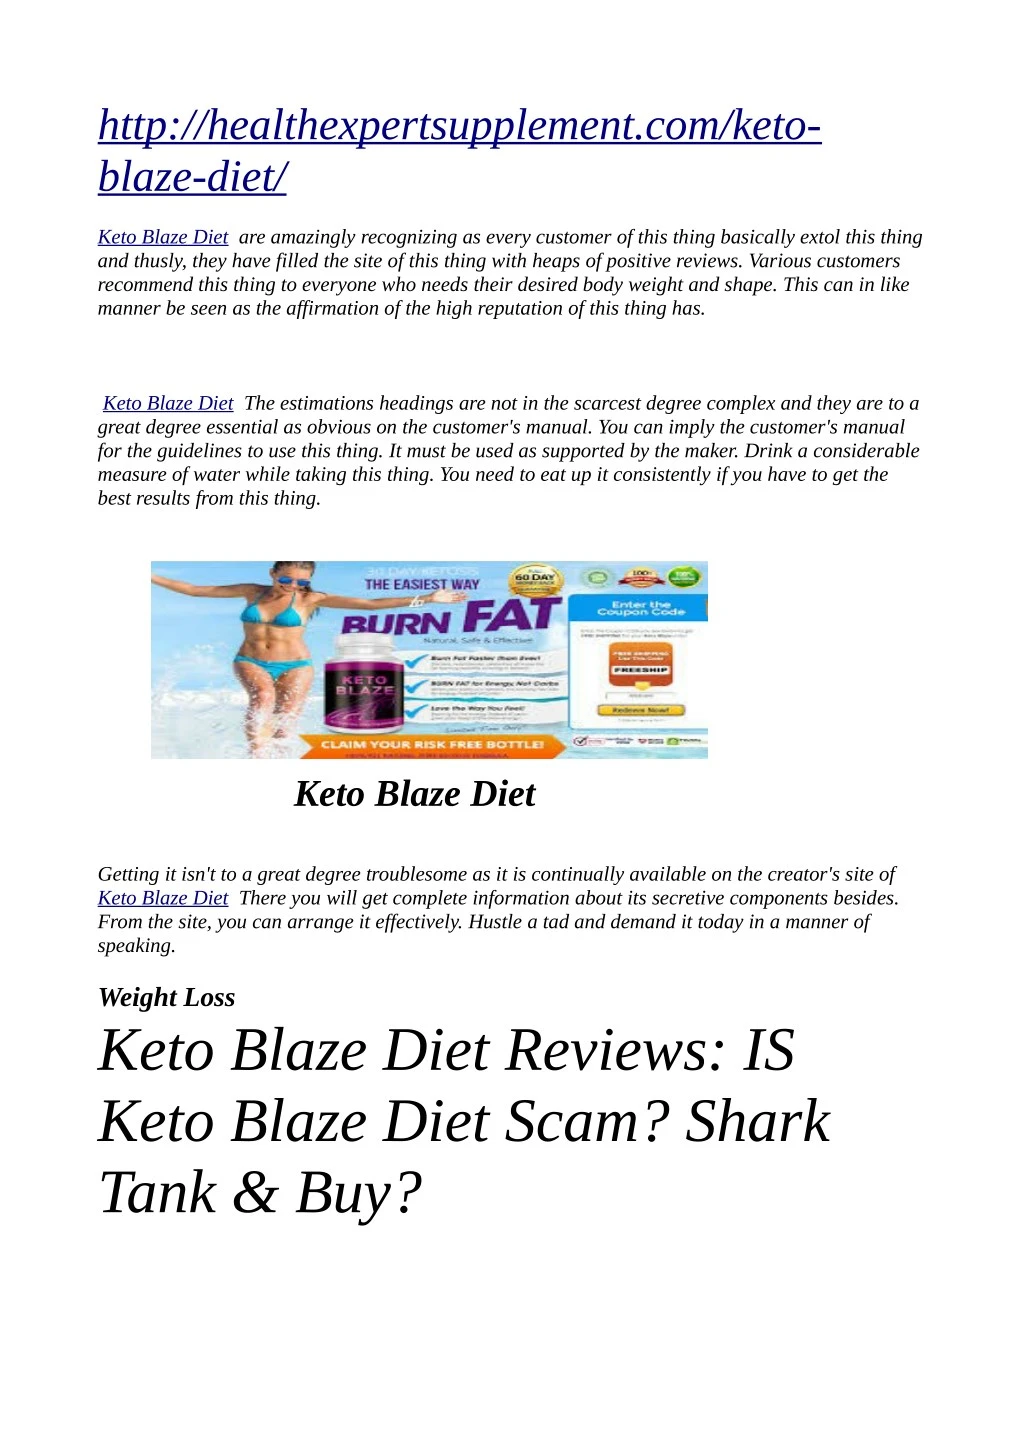 http healthexpertsupplement com keto blaze diet